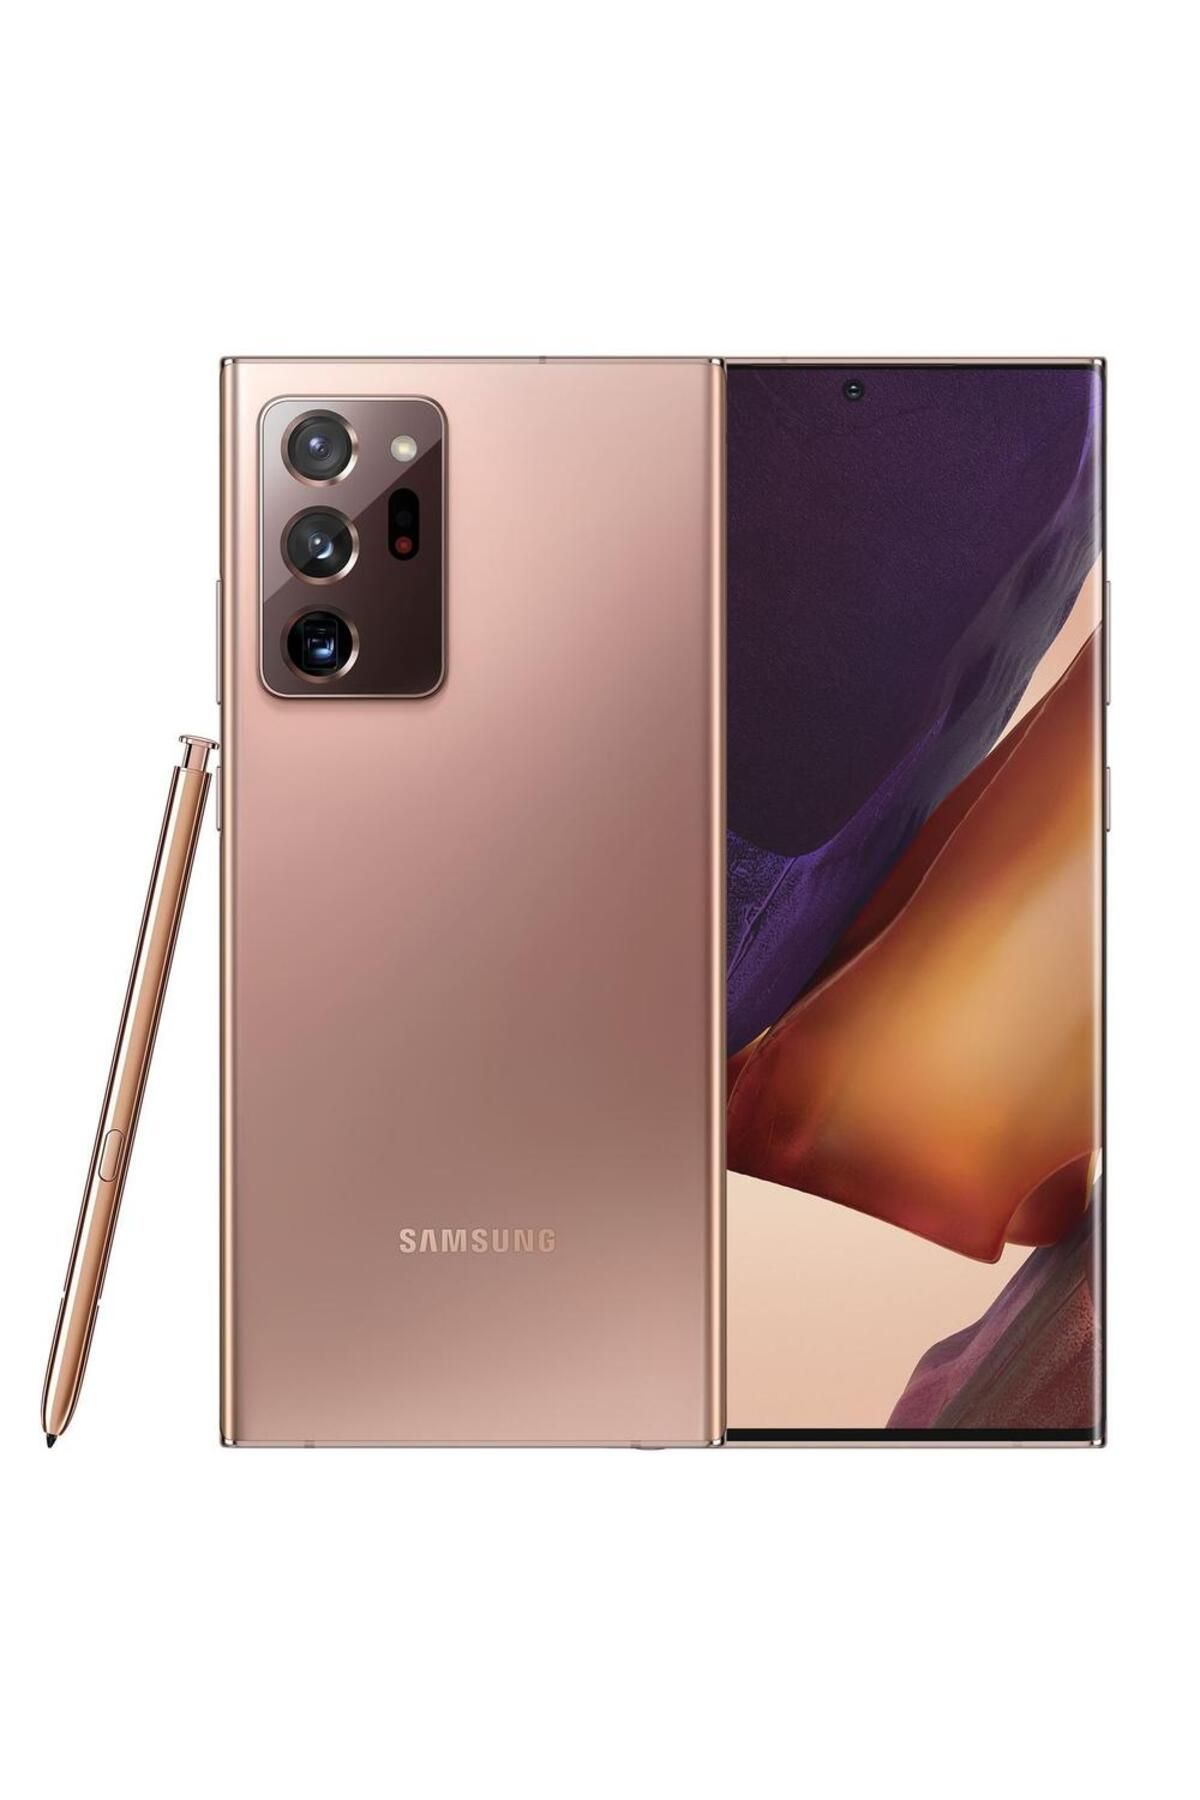 Samsung Yenilenmiş Samsung Galaxy Note 20 Ultra 256 GB (12 Ay Delta Servis Garantili) - B Grade